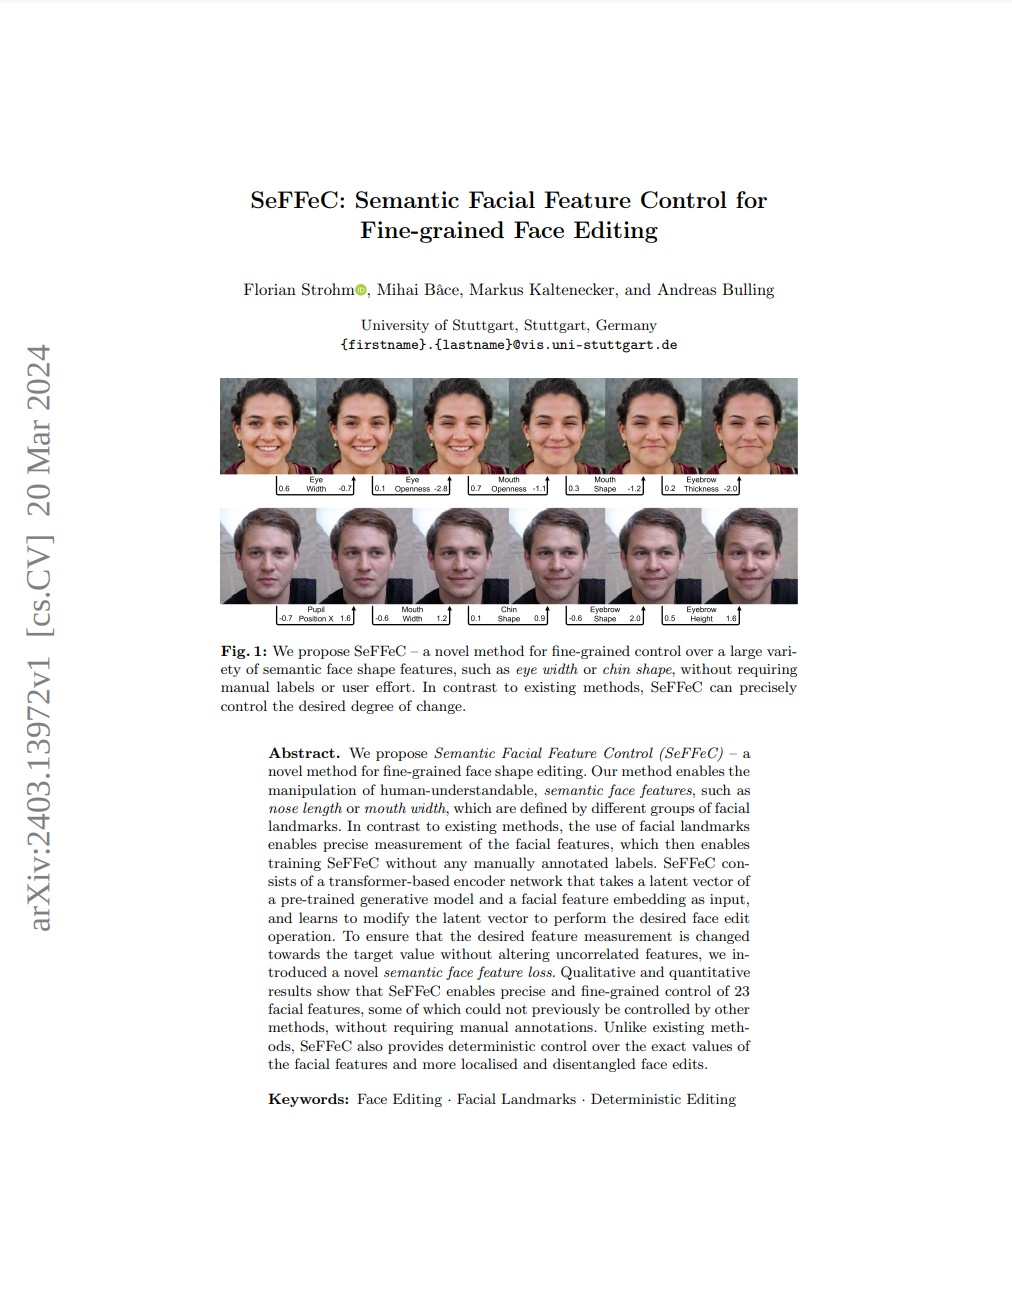 SeFFeC: Semantic Facial Feature Control for Fine-grained Face Editing